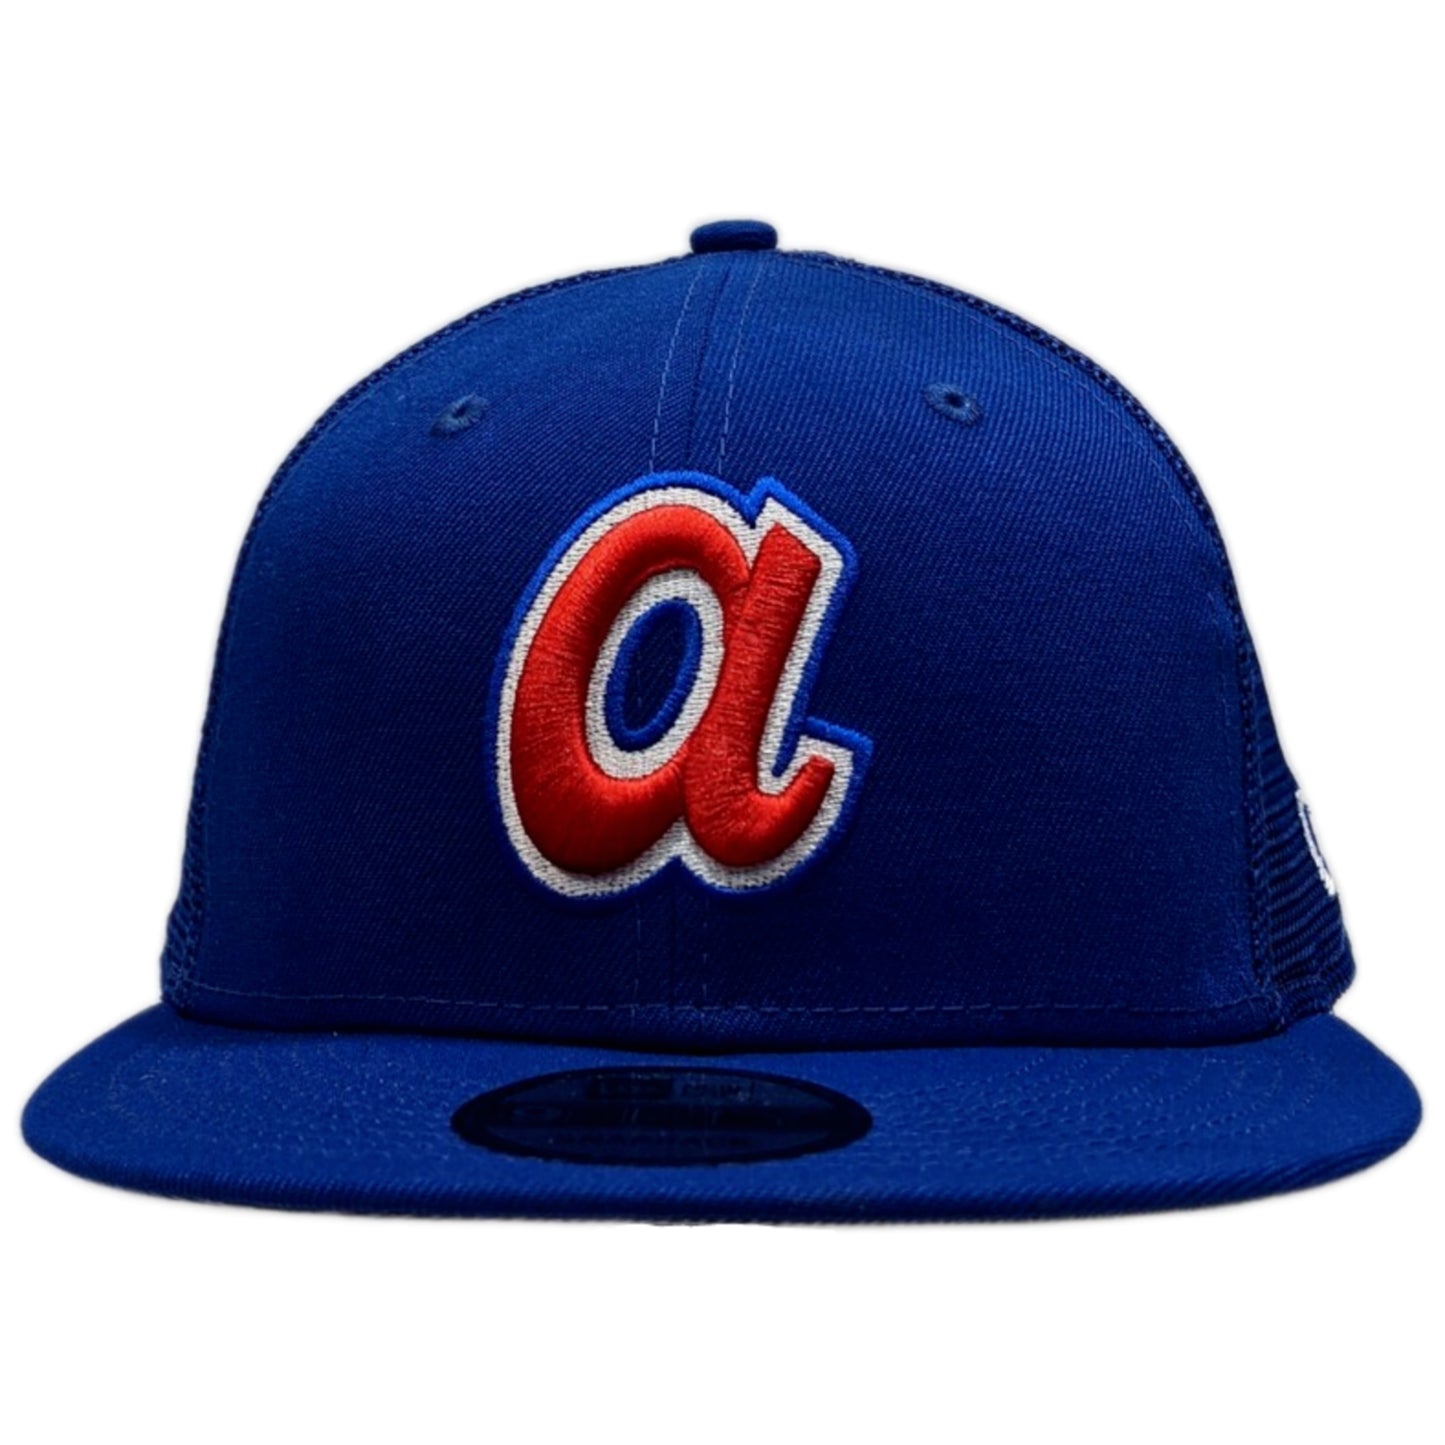 Men's Atlanta Braves New Era Cooperstown Collection Royal Mesh 9FIFTY Adjustable Snapback Hat